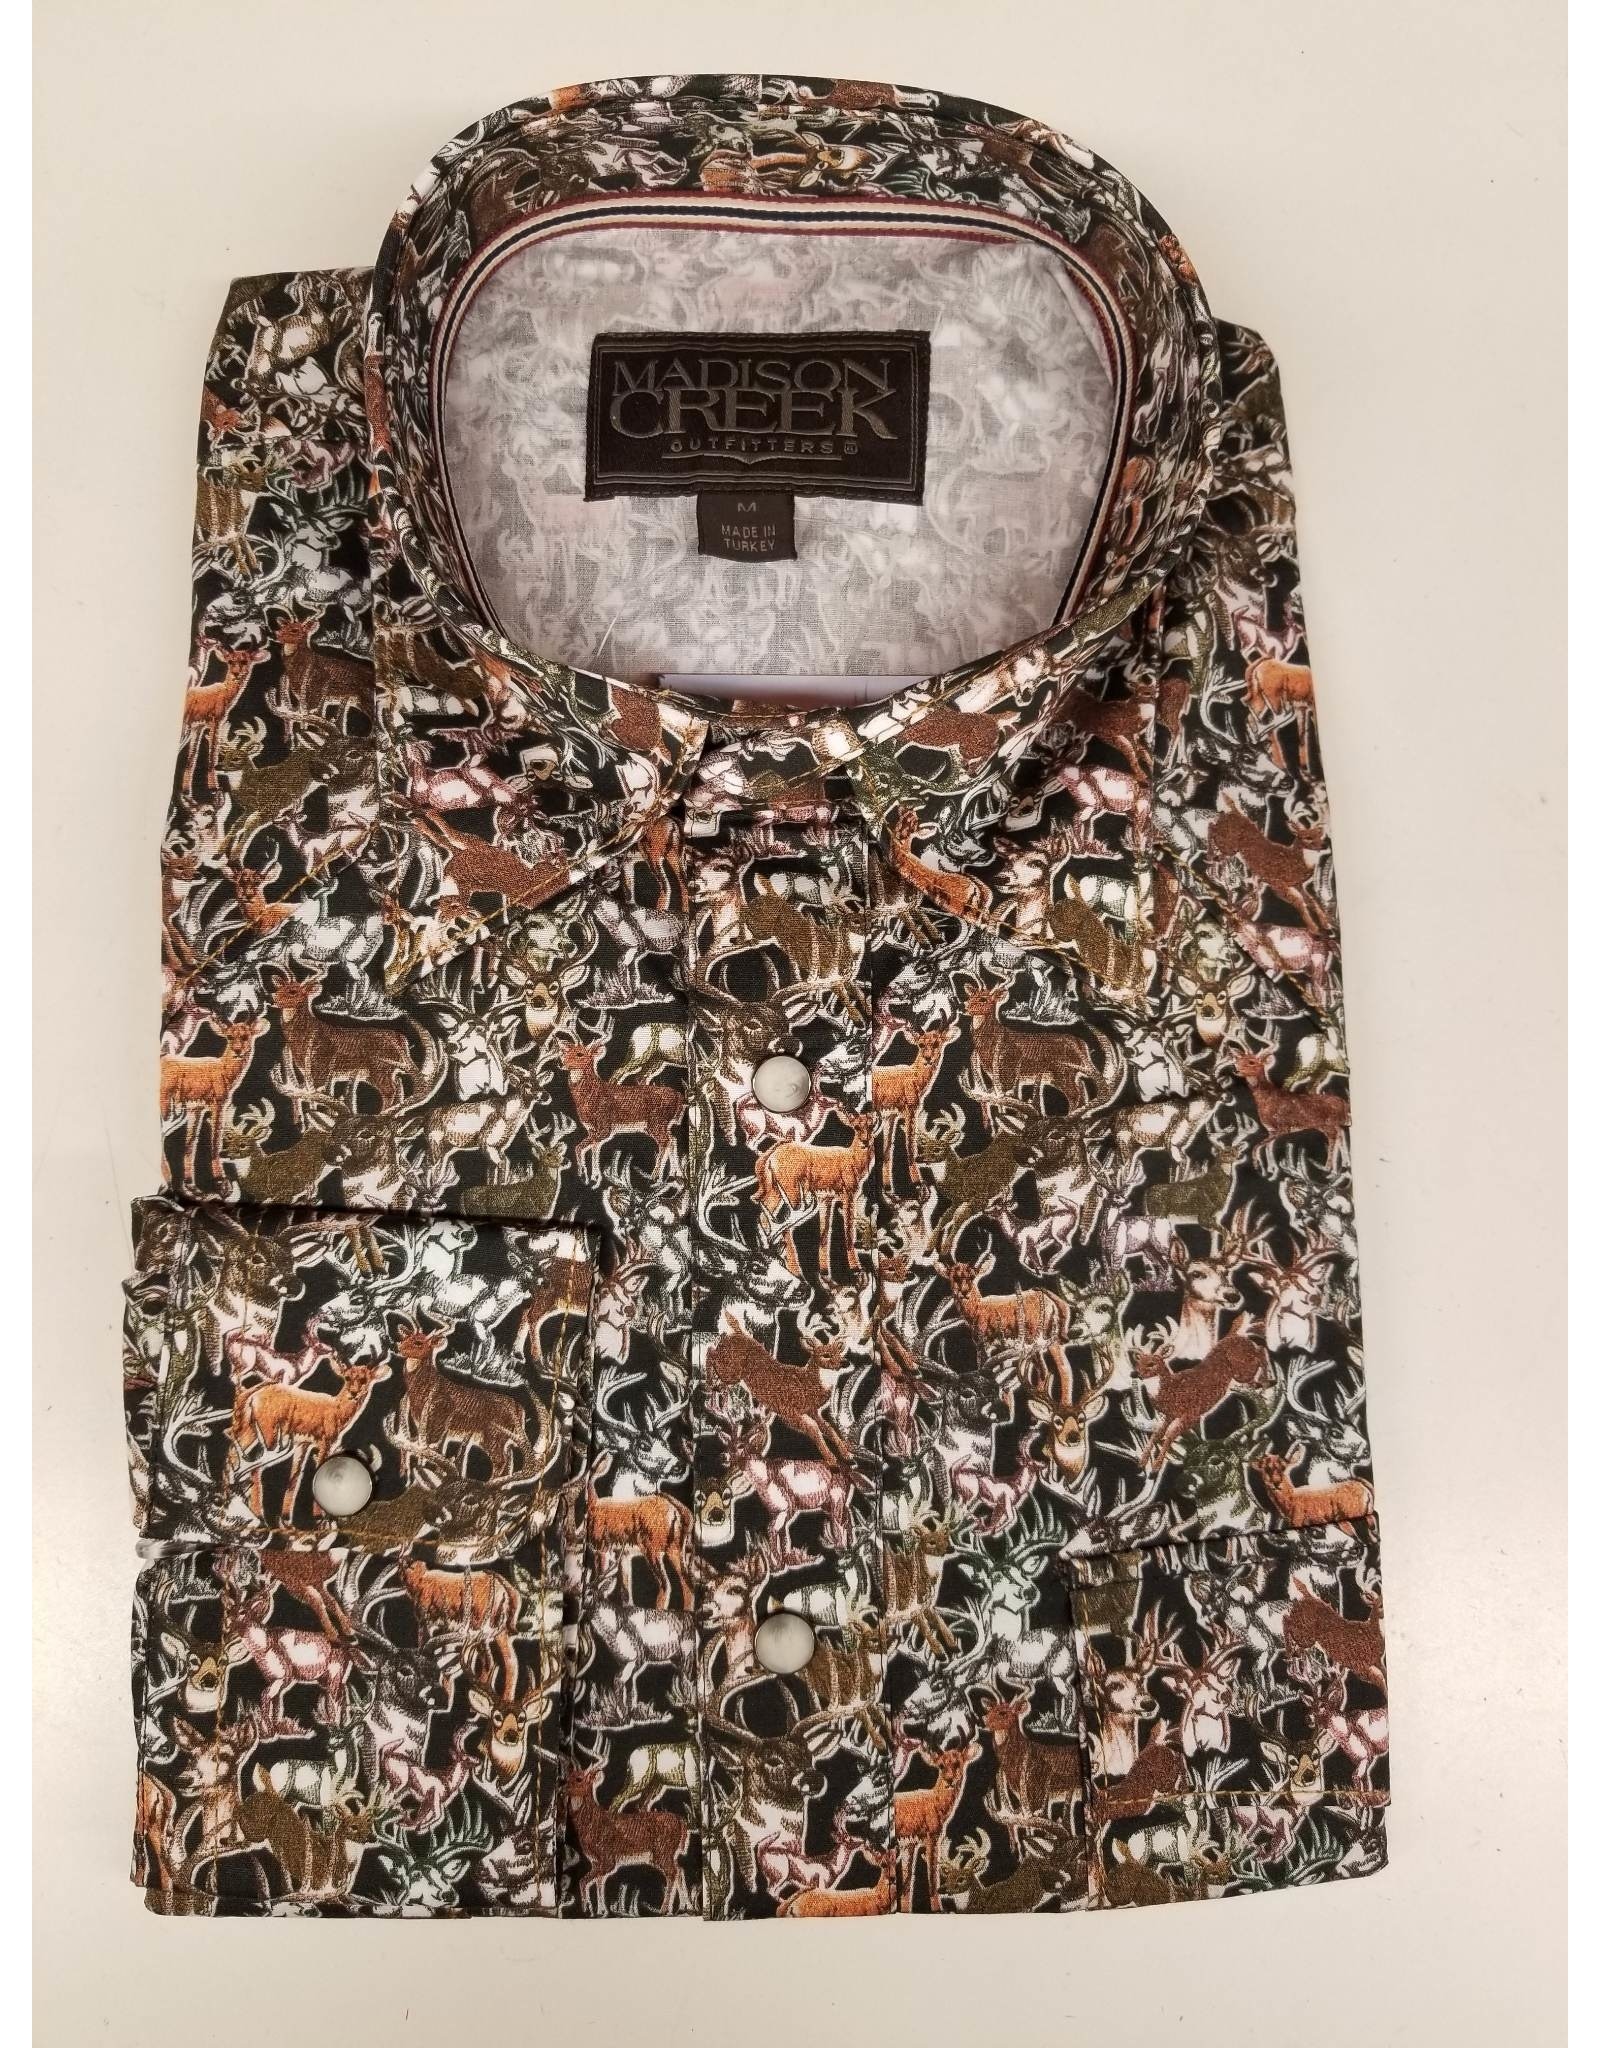 Madison Creek Outfitters Bisley Western Shirt Deer Print